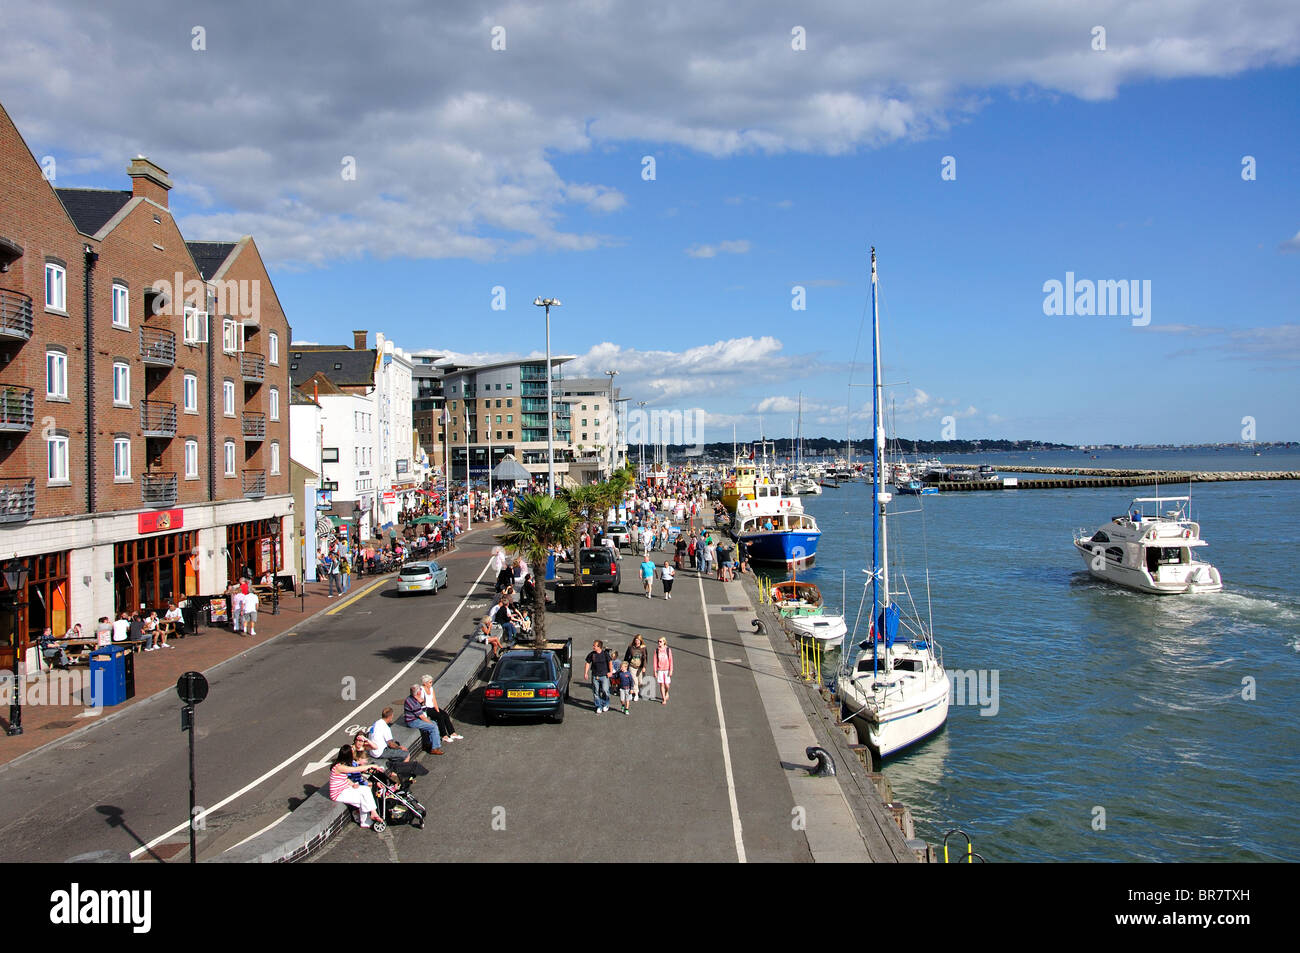 Promenade view, The Quay, Poole, Dorset, England, United Kingdom Stock Photo